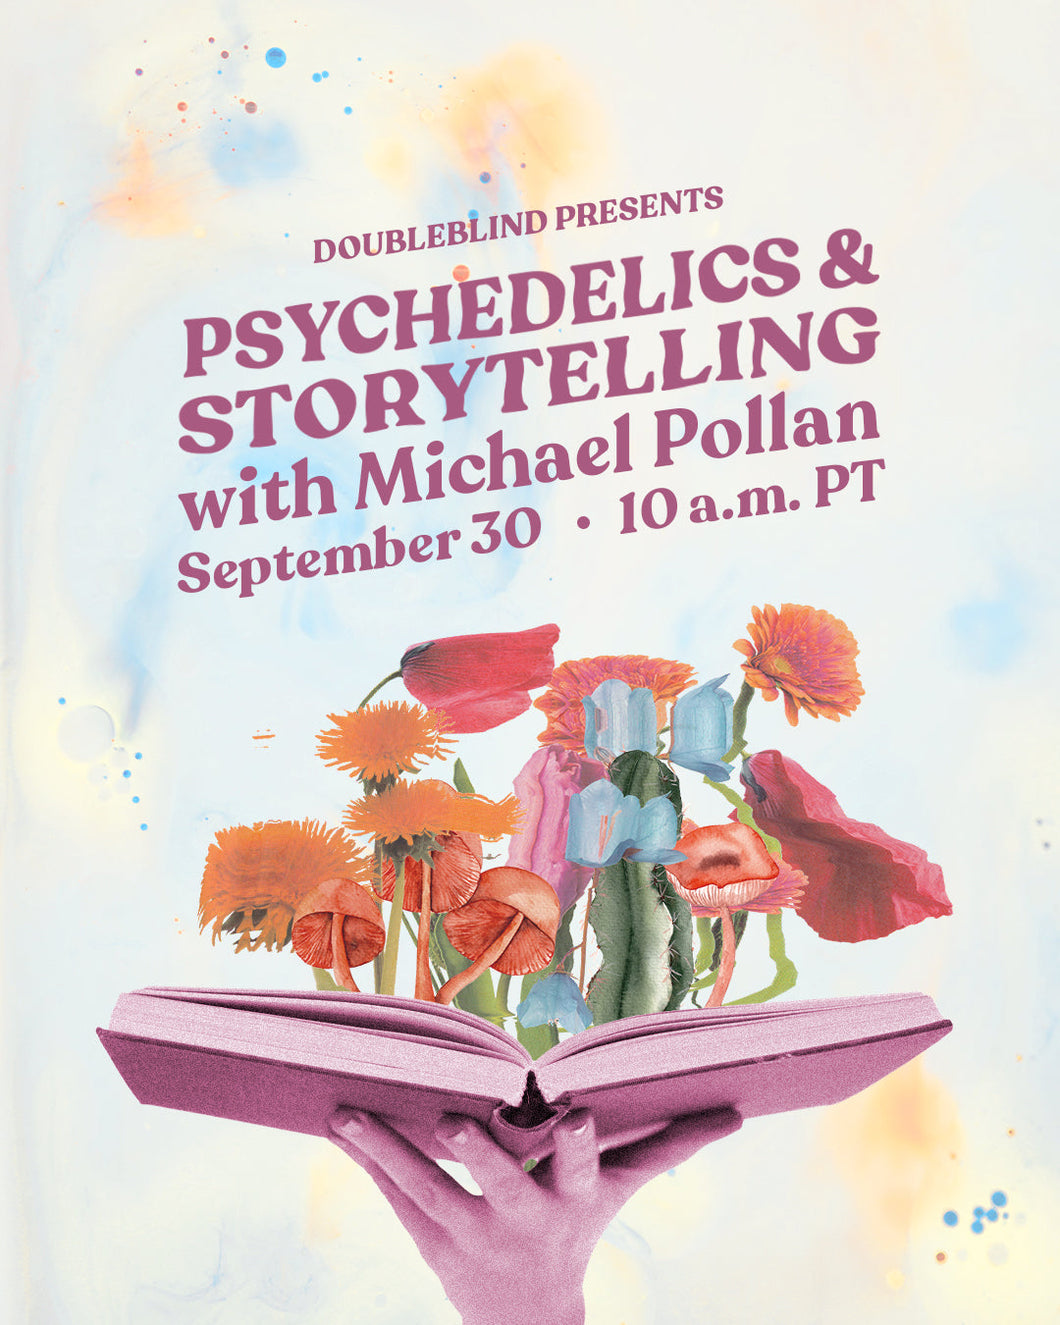 BONUS! Psychedelics & Storytelling with Michael Pollan x DoubleBlind Webinar Recording